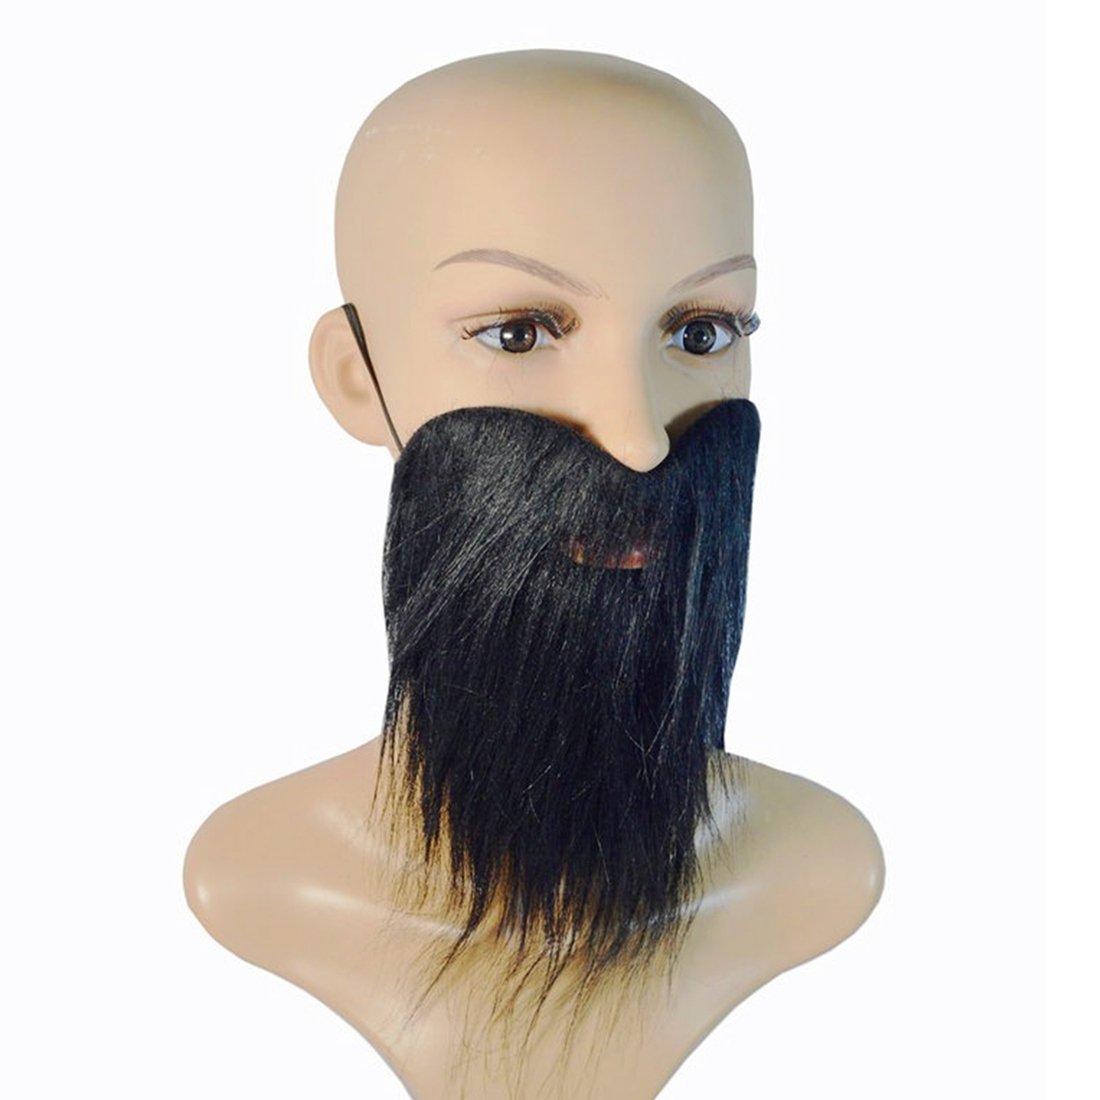 Holloween Prop Dress Up Prop Fake Beard With Moustache COS Tool Black